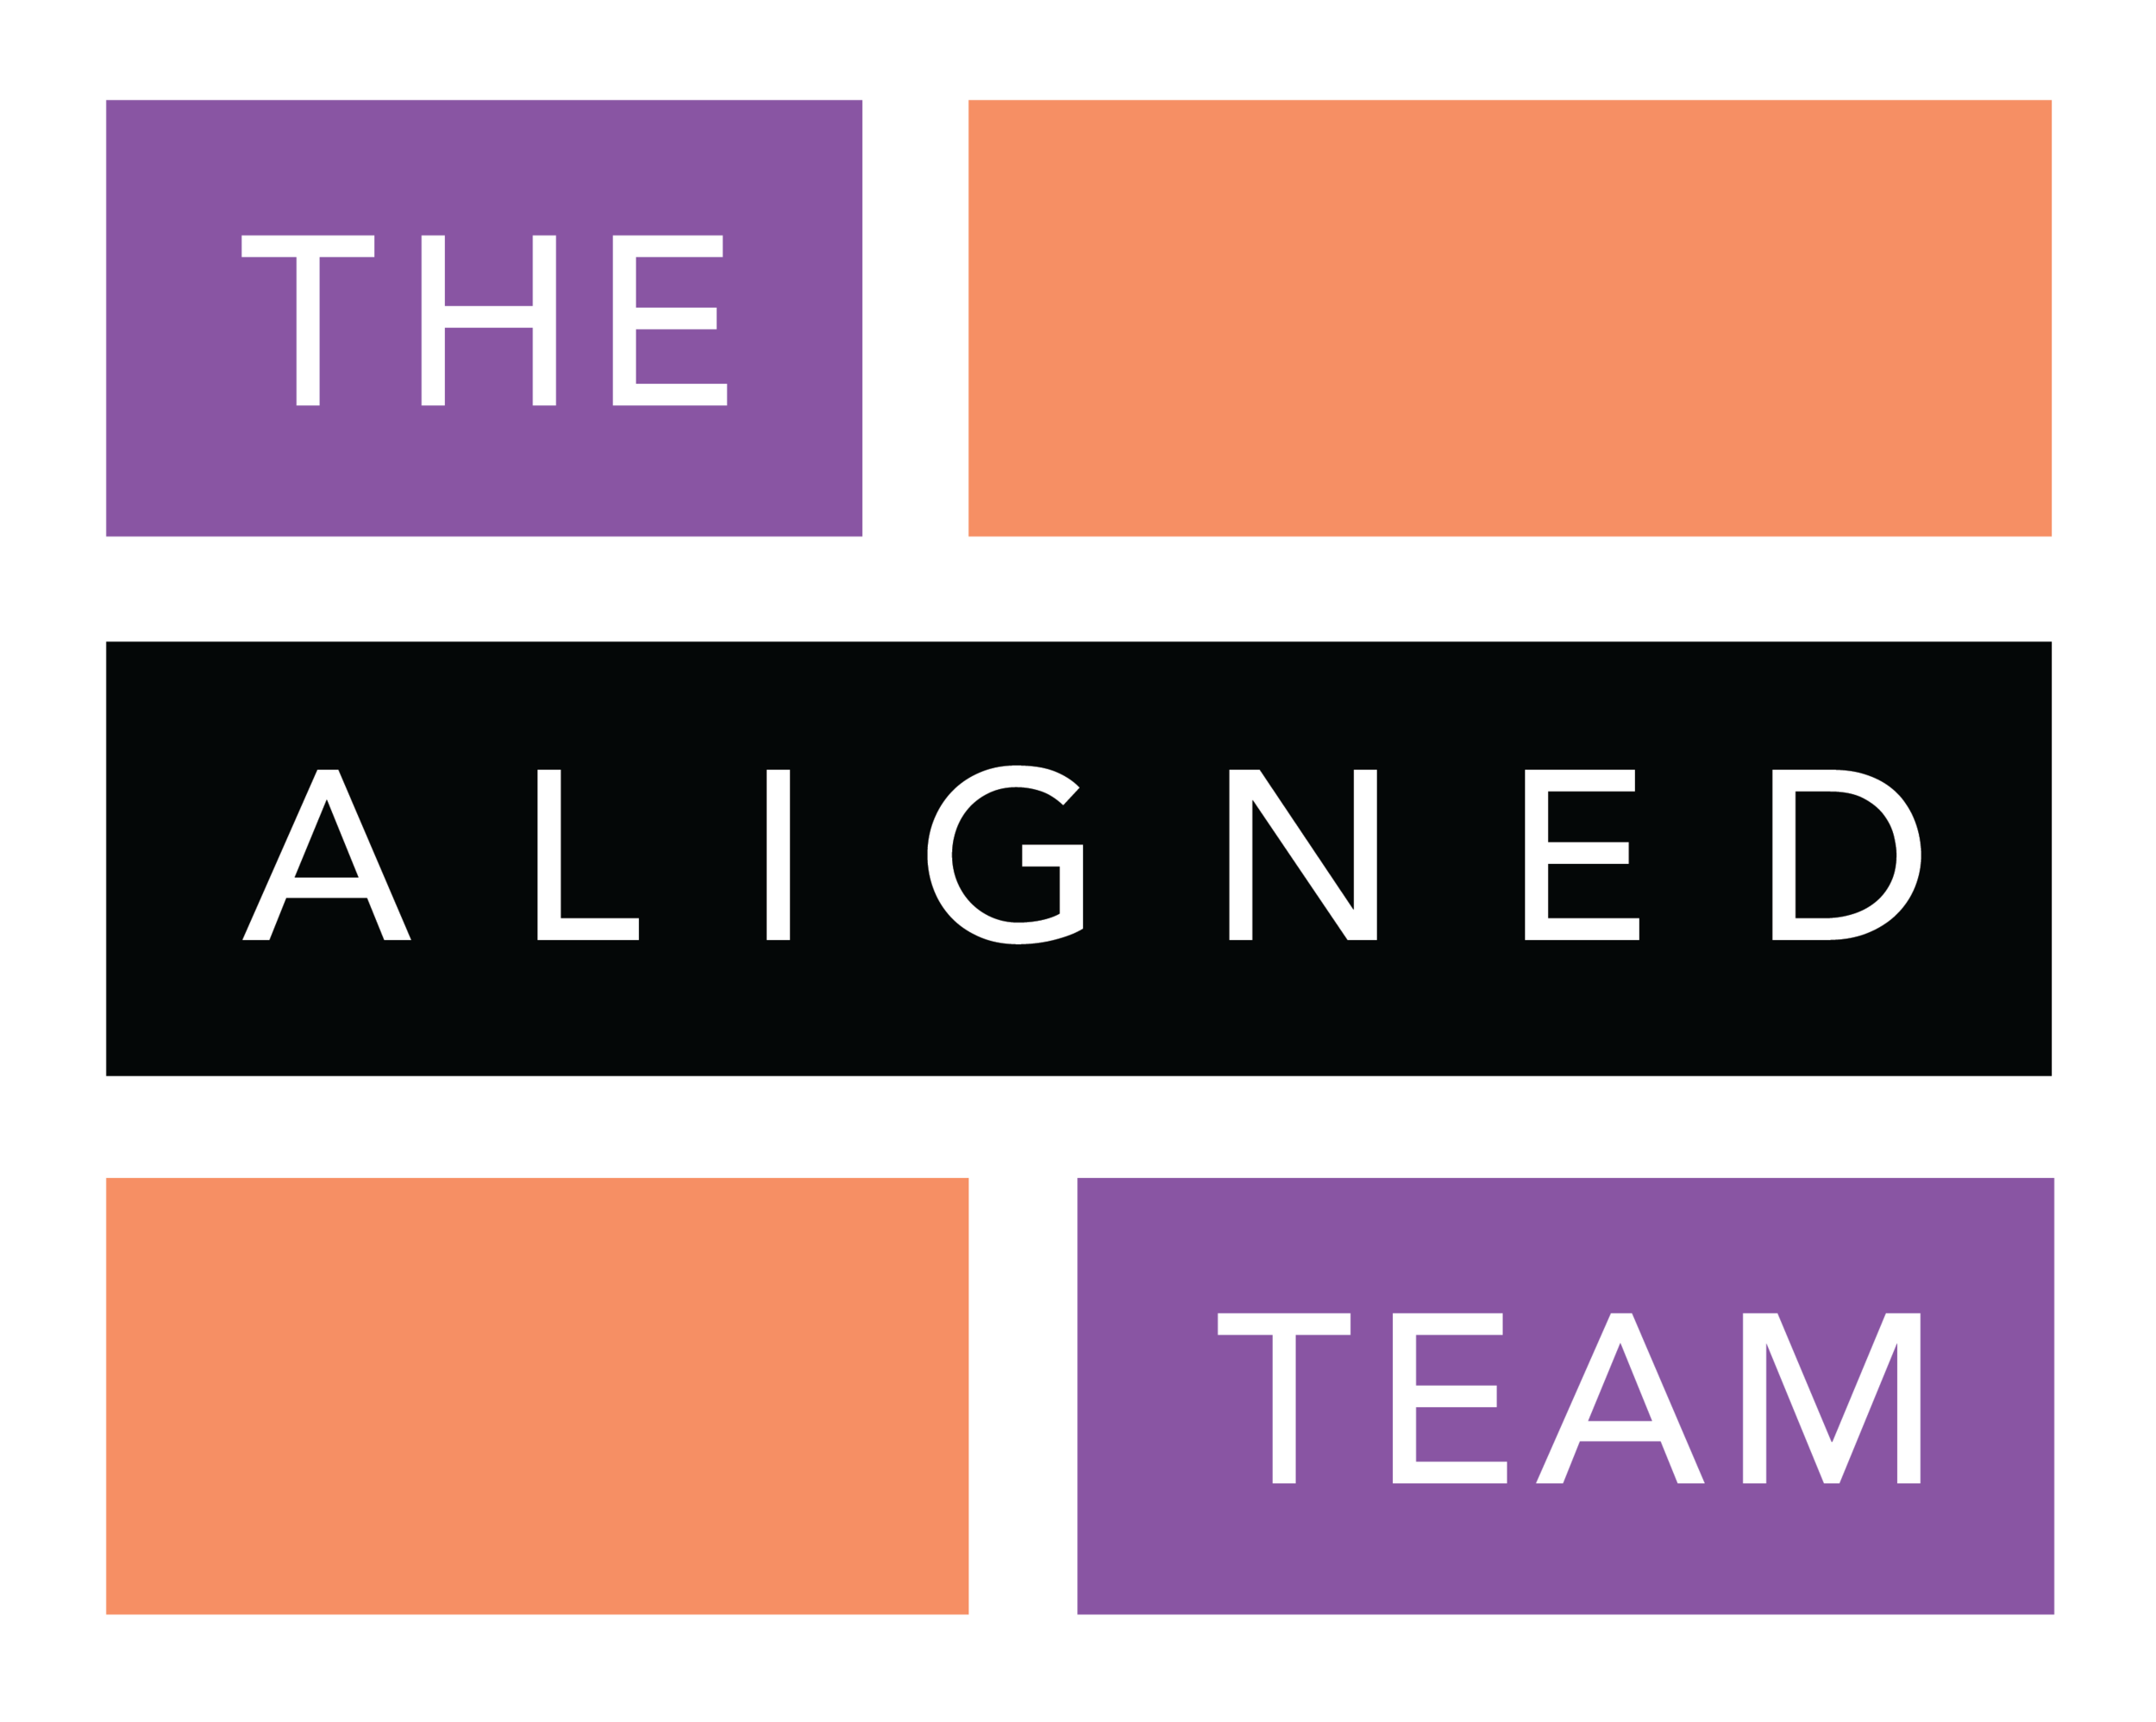 The Aligned team